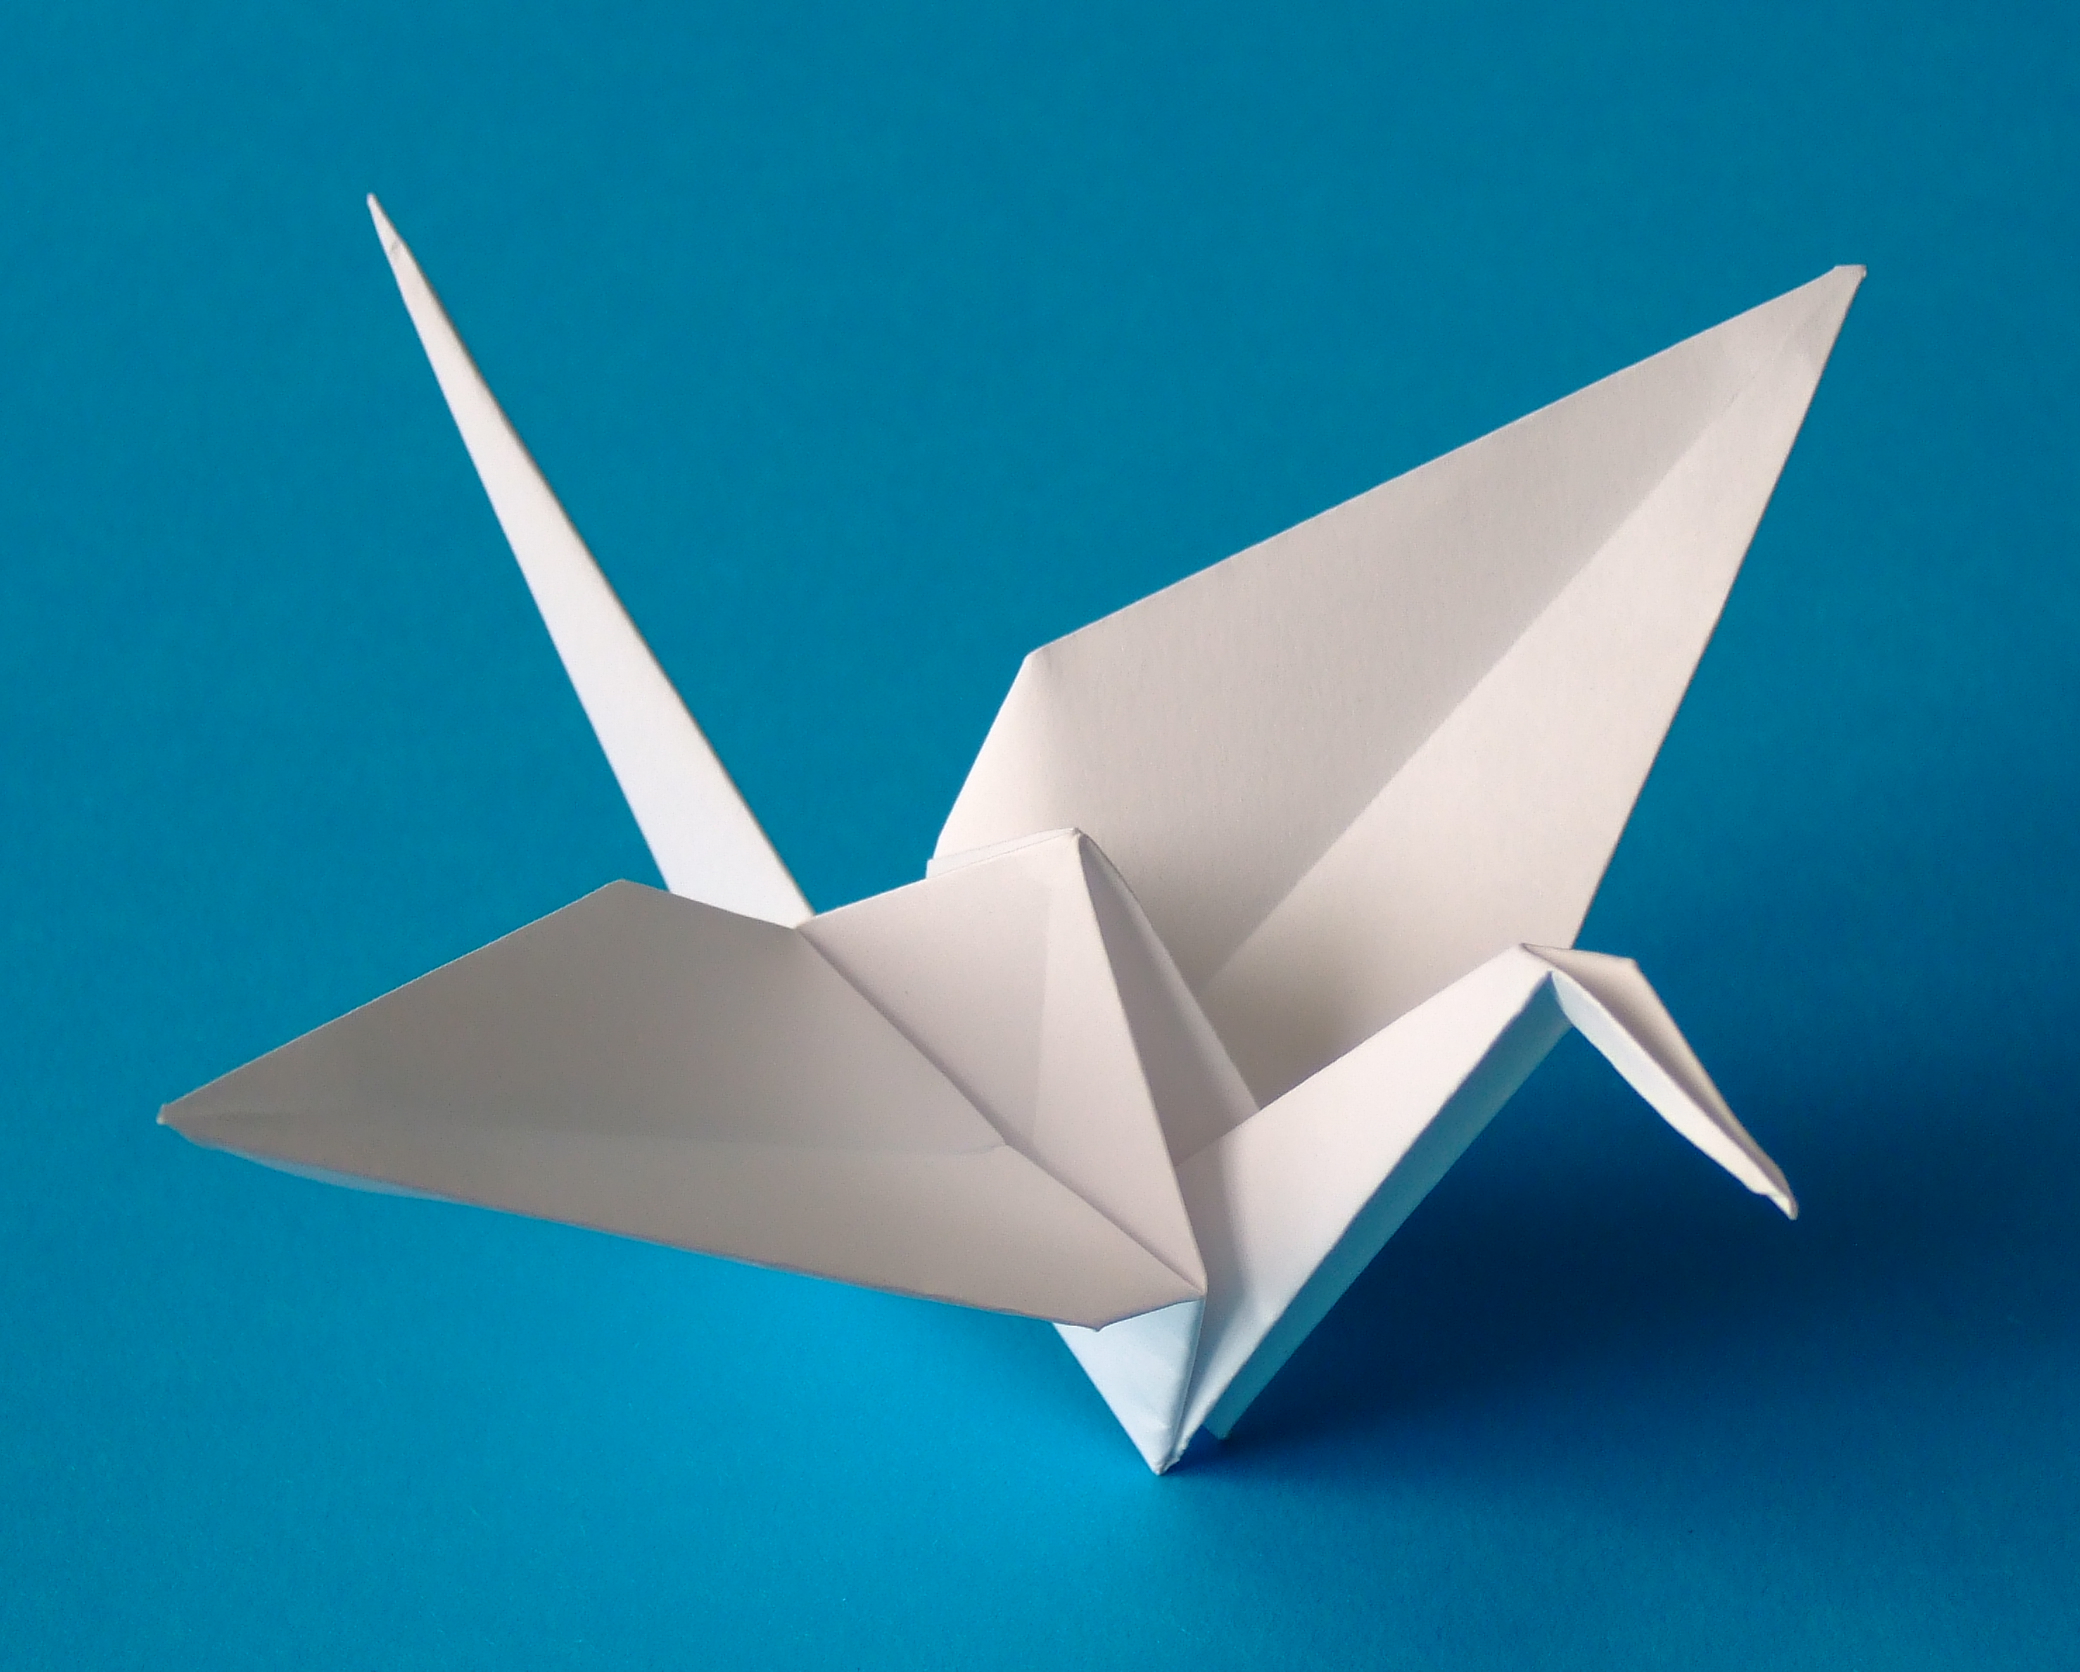 File:Origami-crane.jpg - Wikipedia